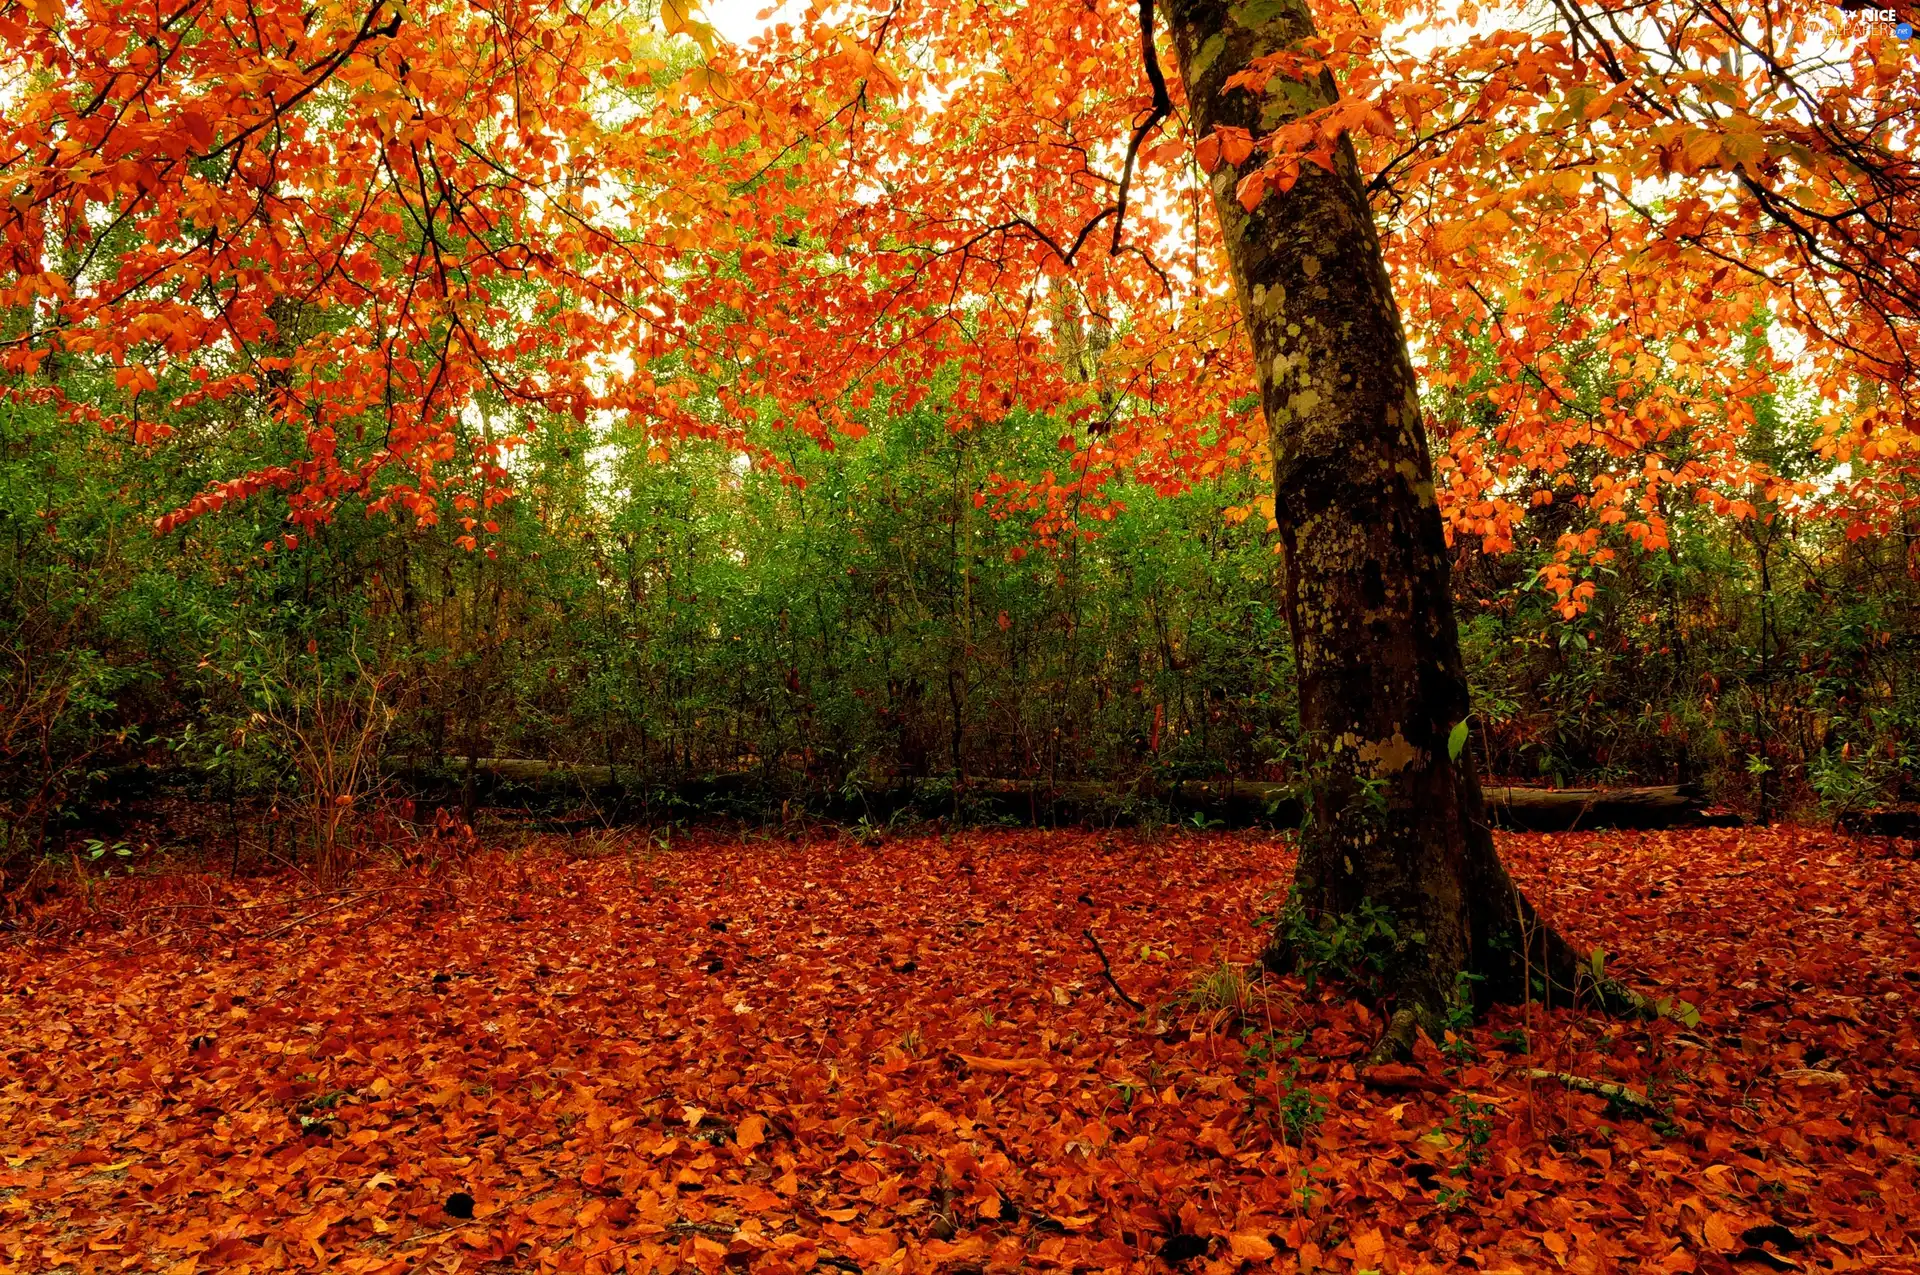 autumn, trees, Bush